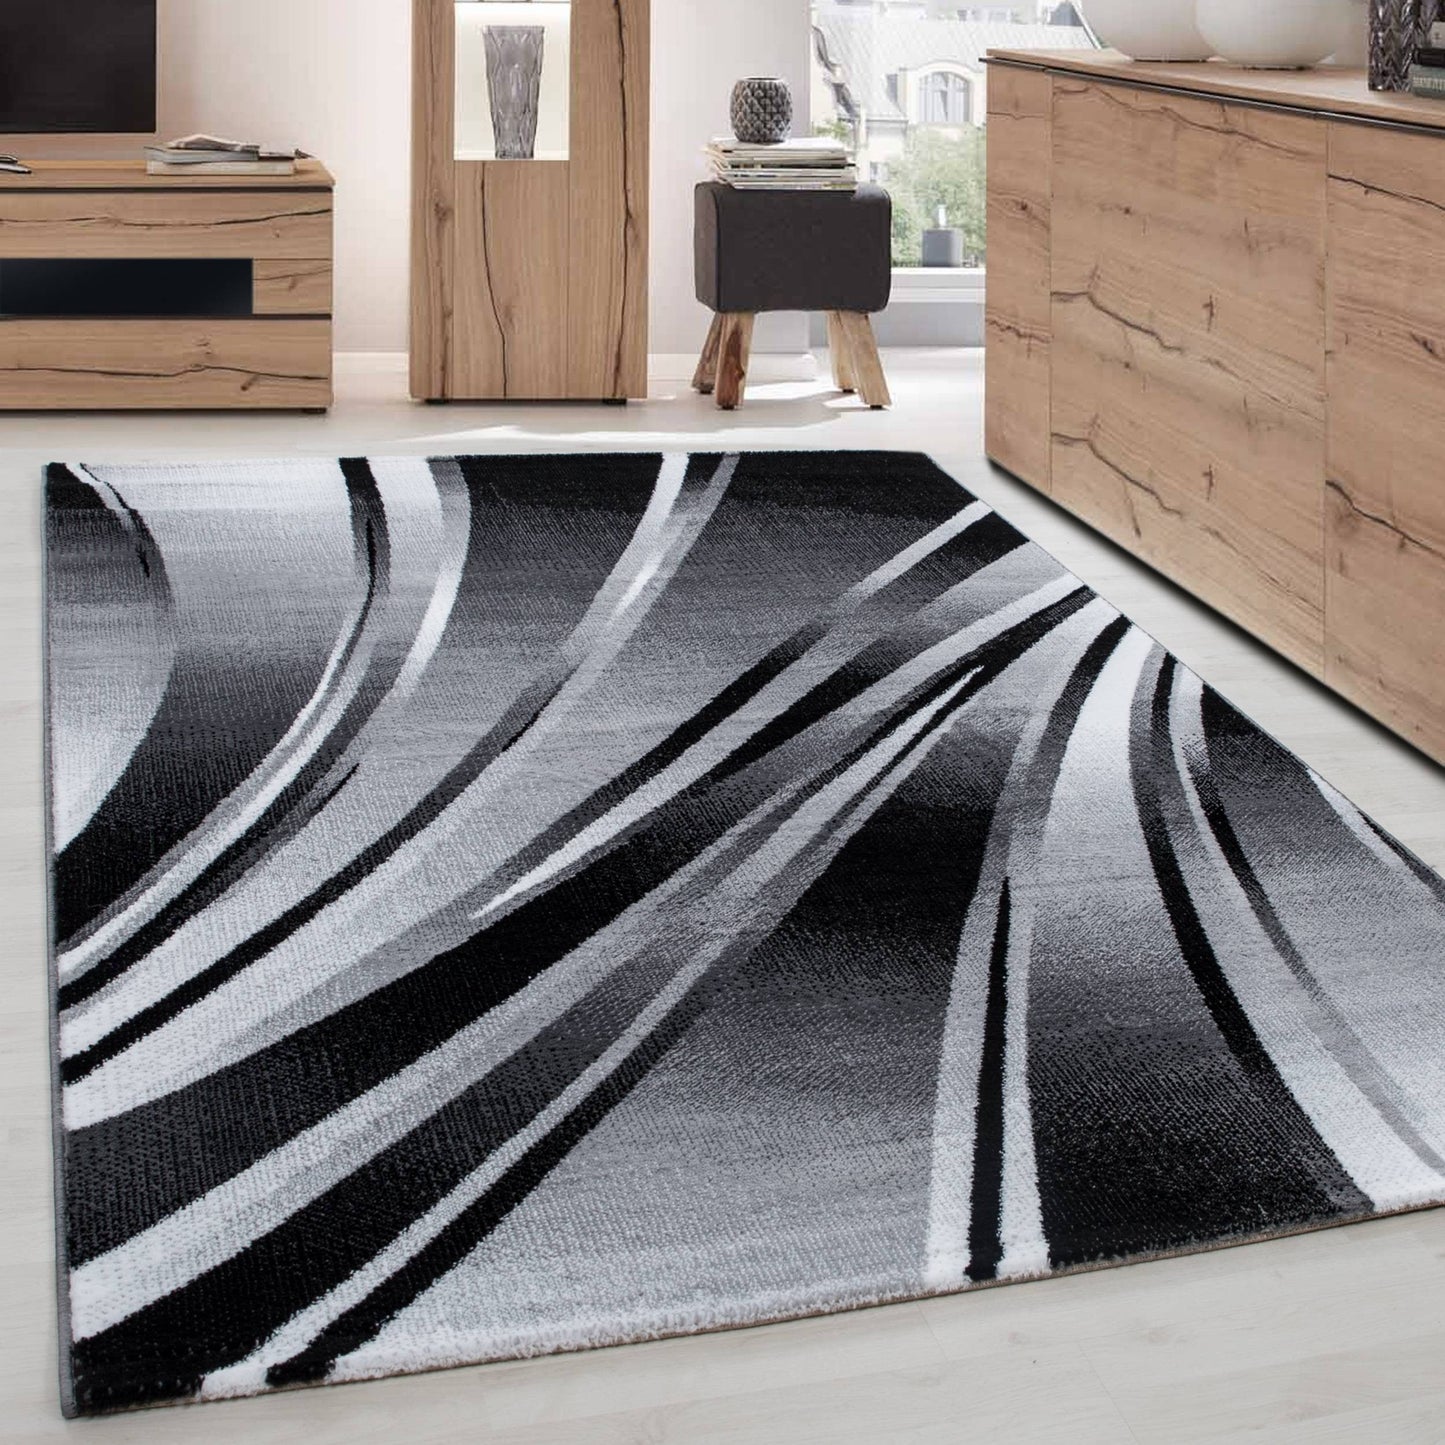 Teppich Modern Designer Geometrisch Wellen Optik Meliert Schwarz Grau Weiss